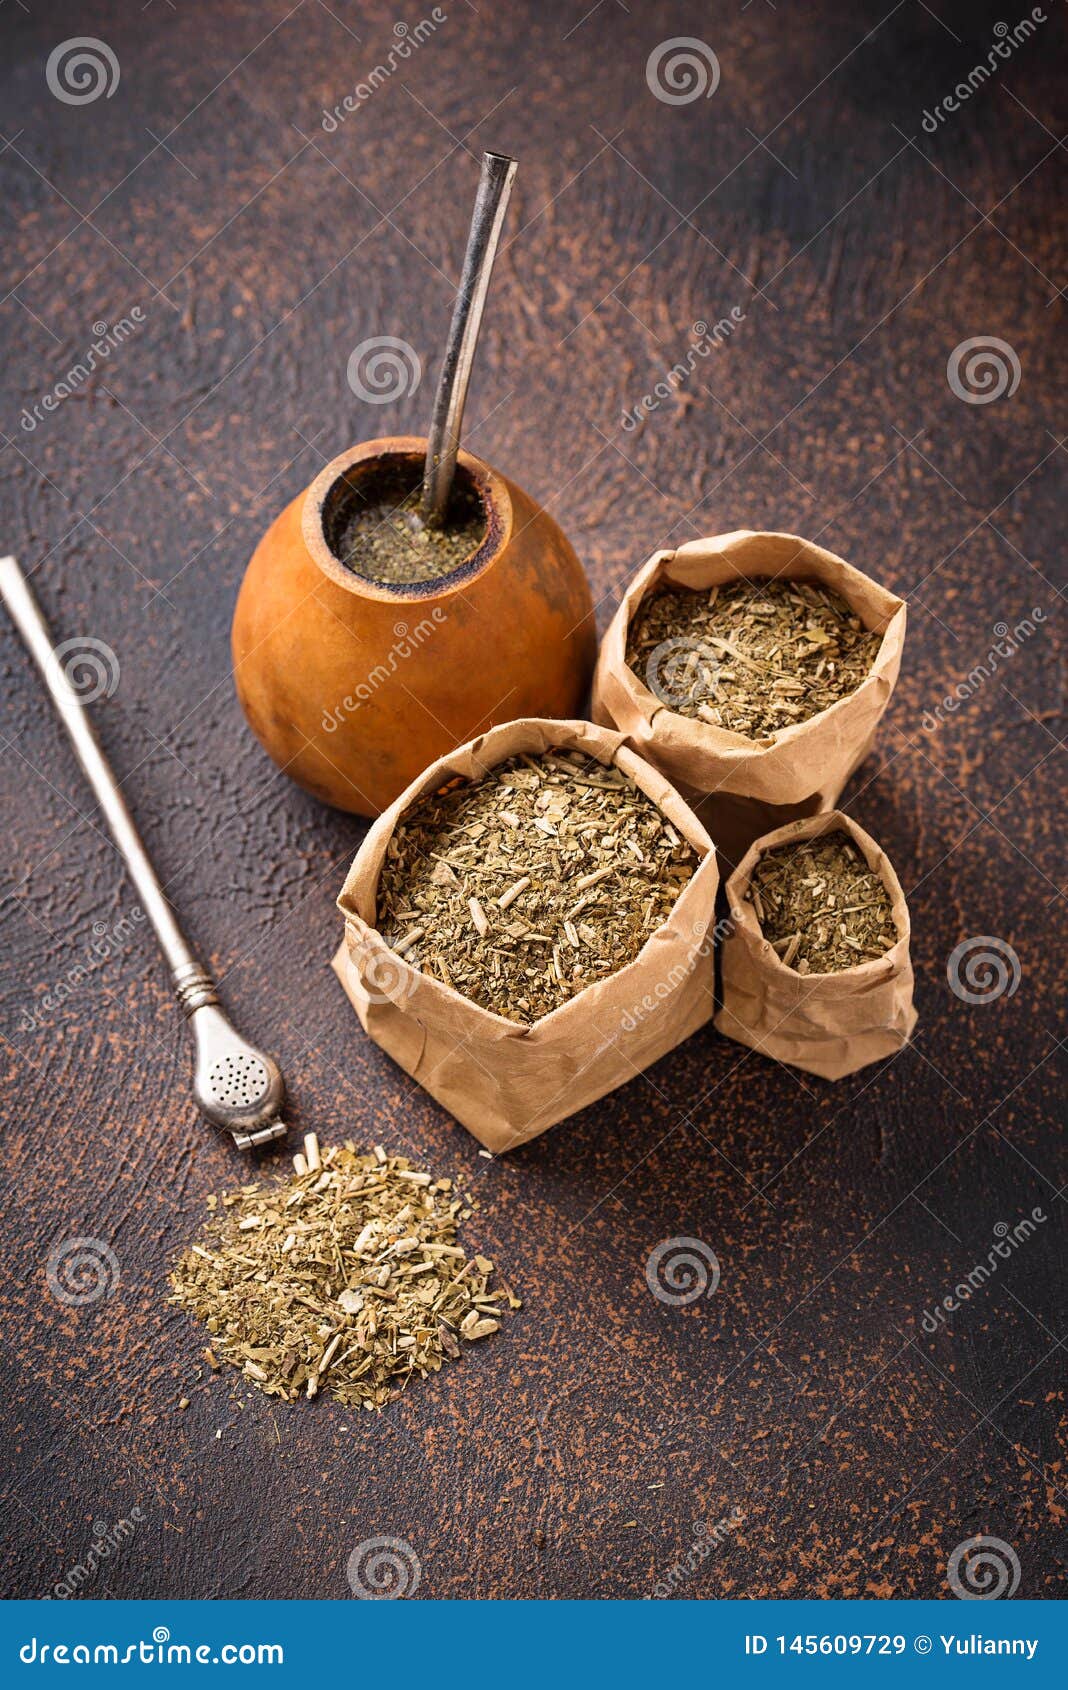 Traditional Argentina Yerba Mate Tea Stock Image - Image of culture, metal:  145609729